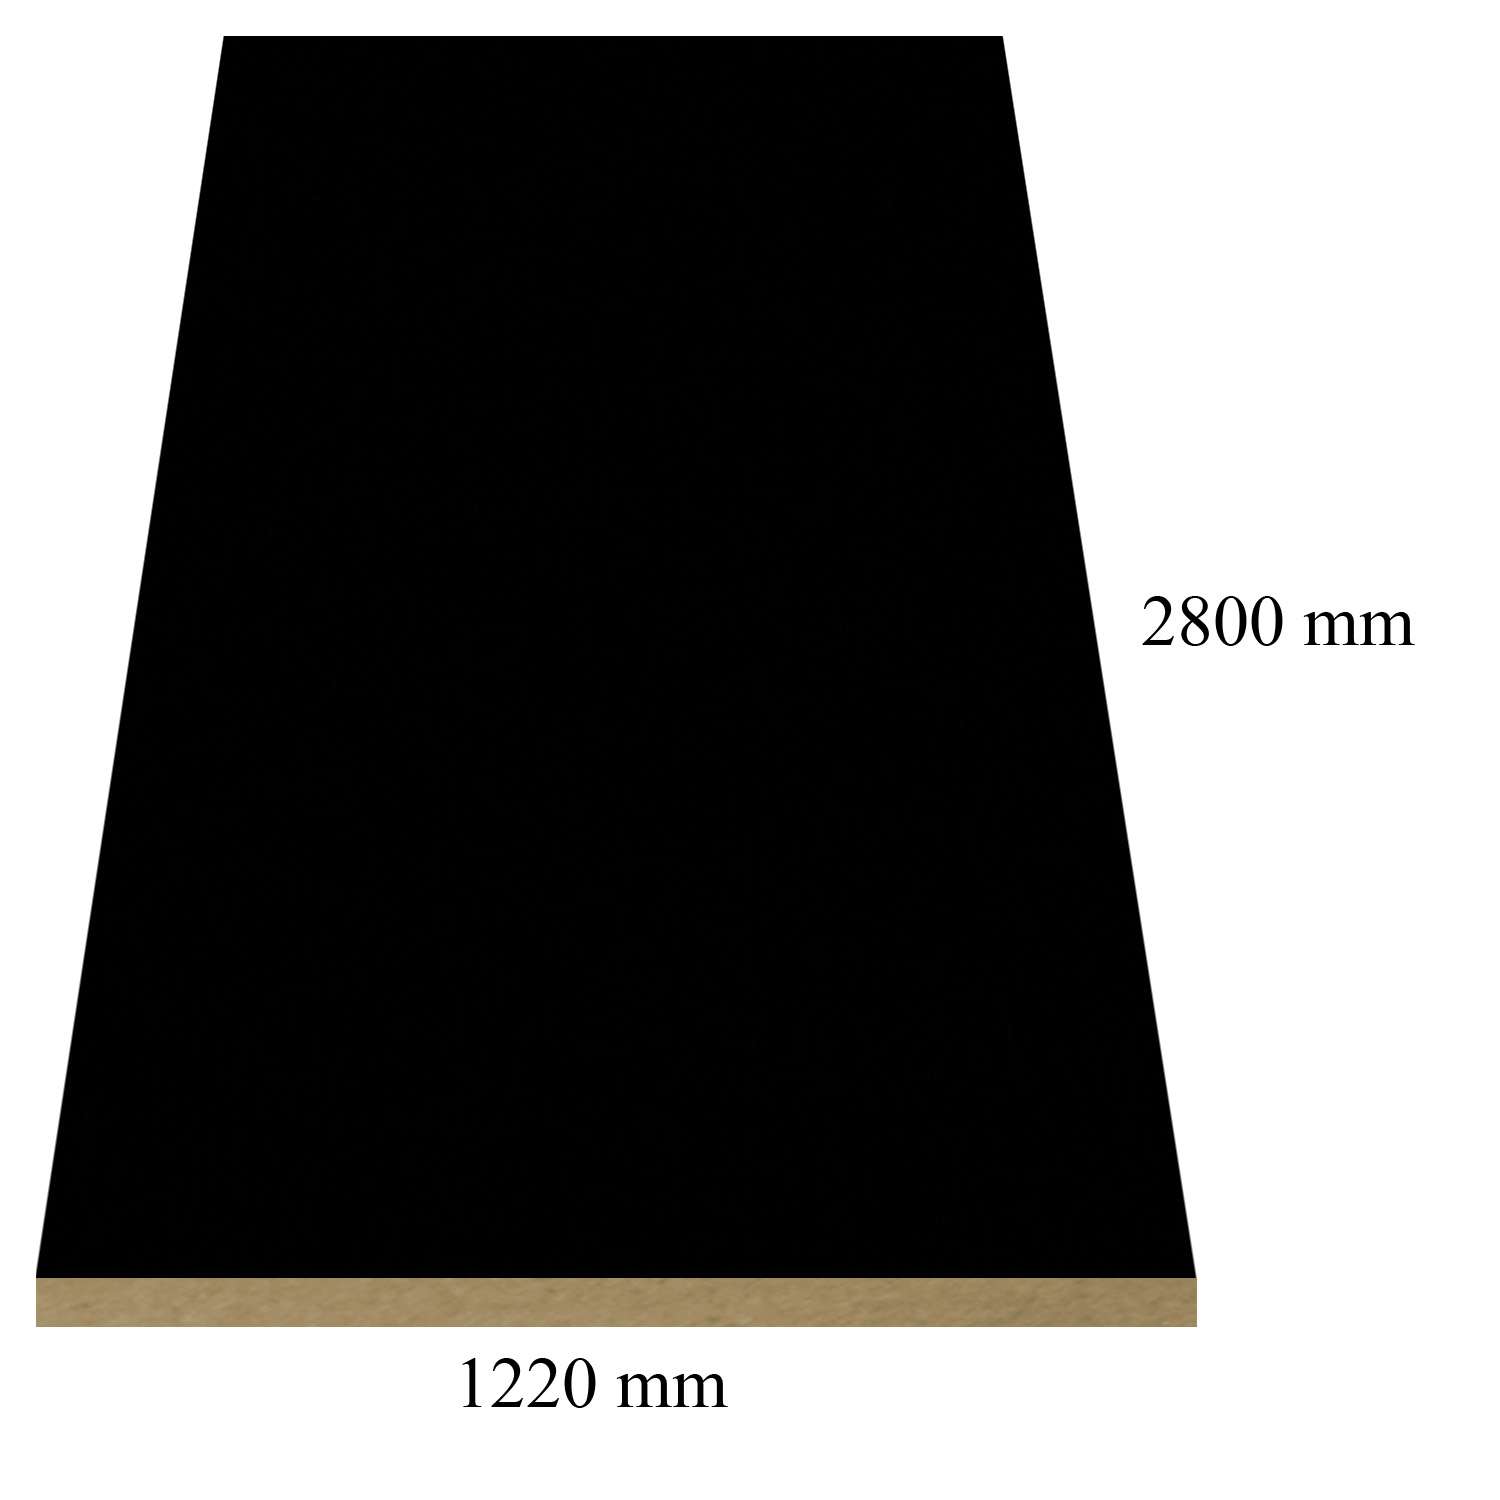 168 Black high gloss - PVC coated 18 mm MDF